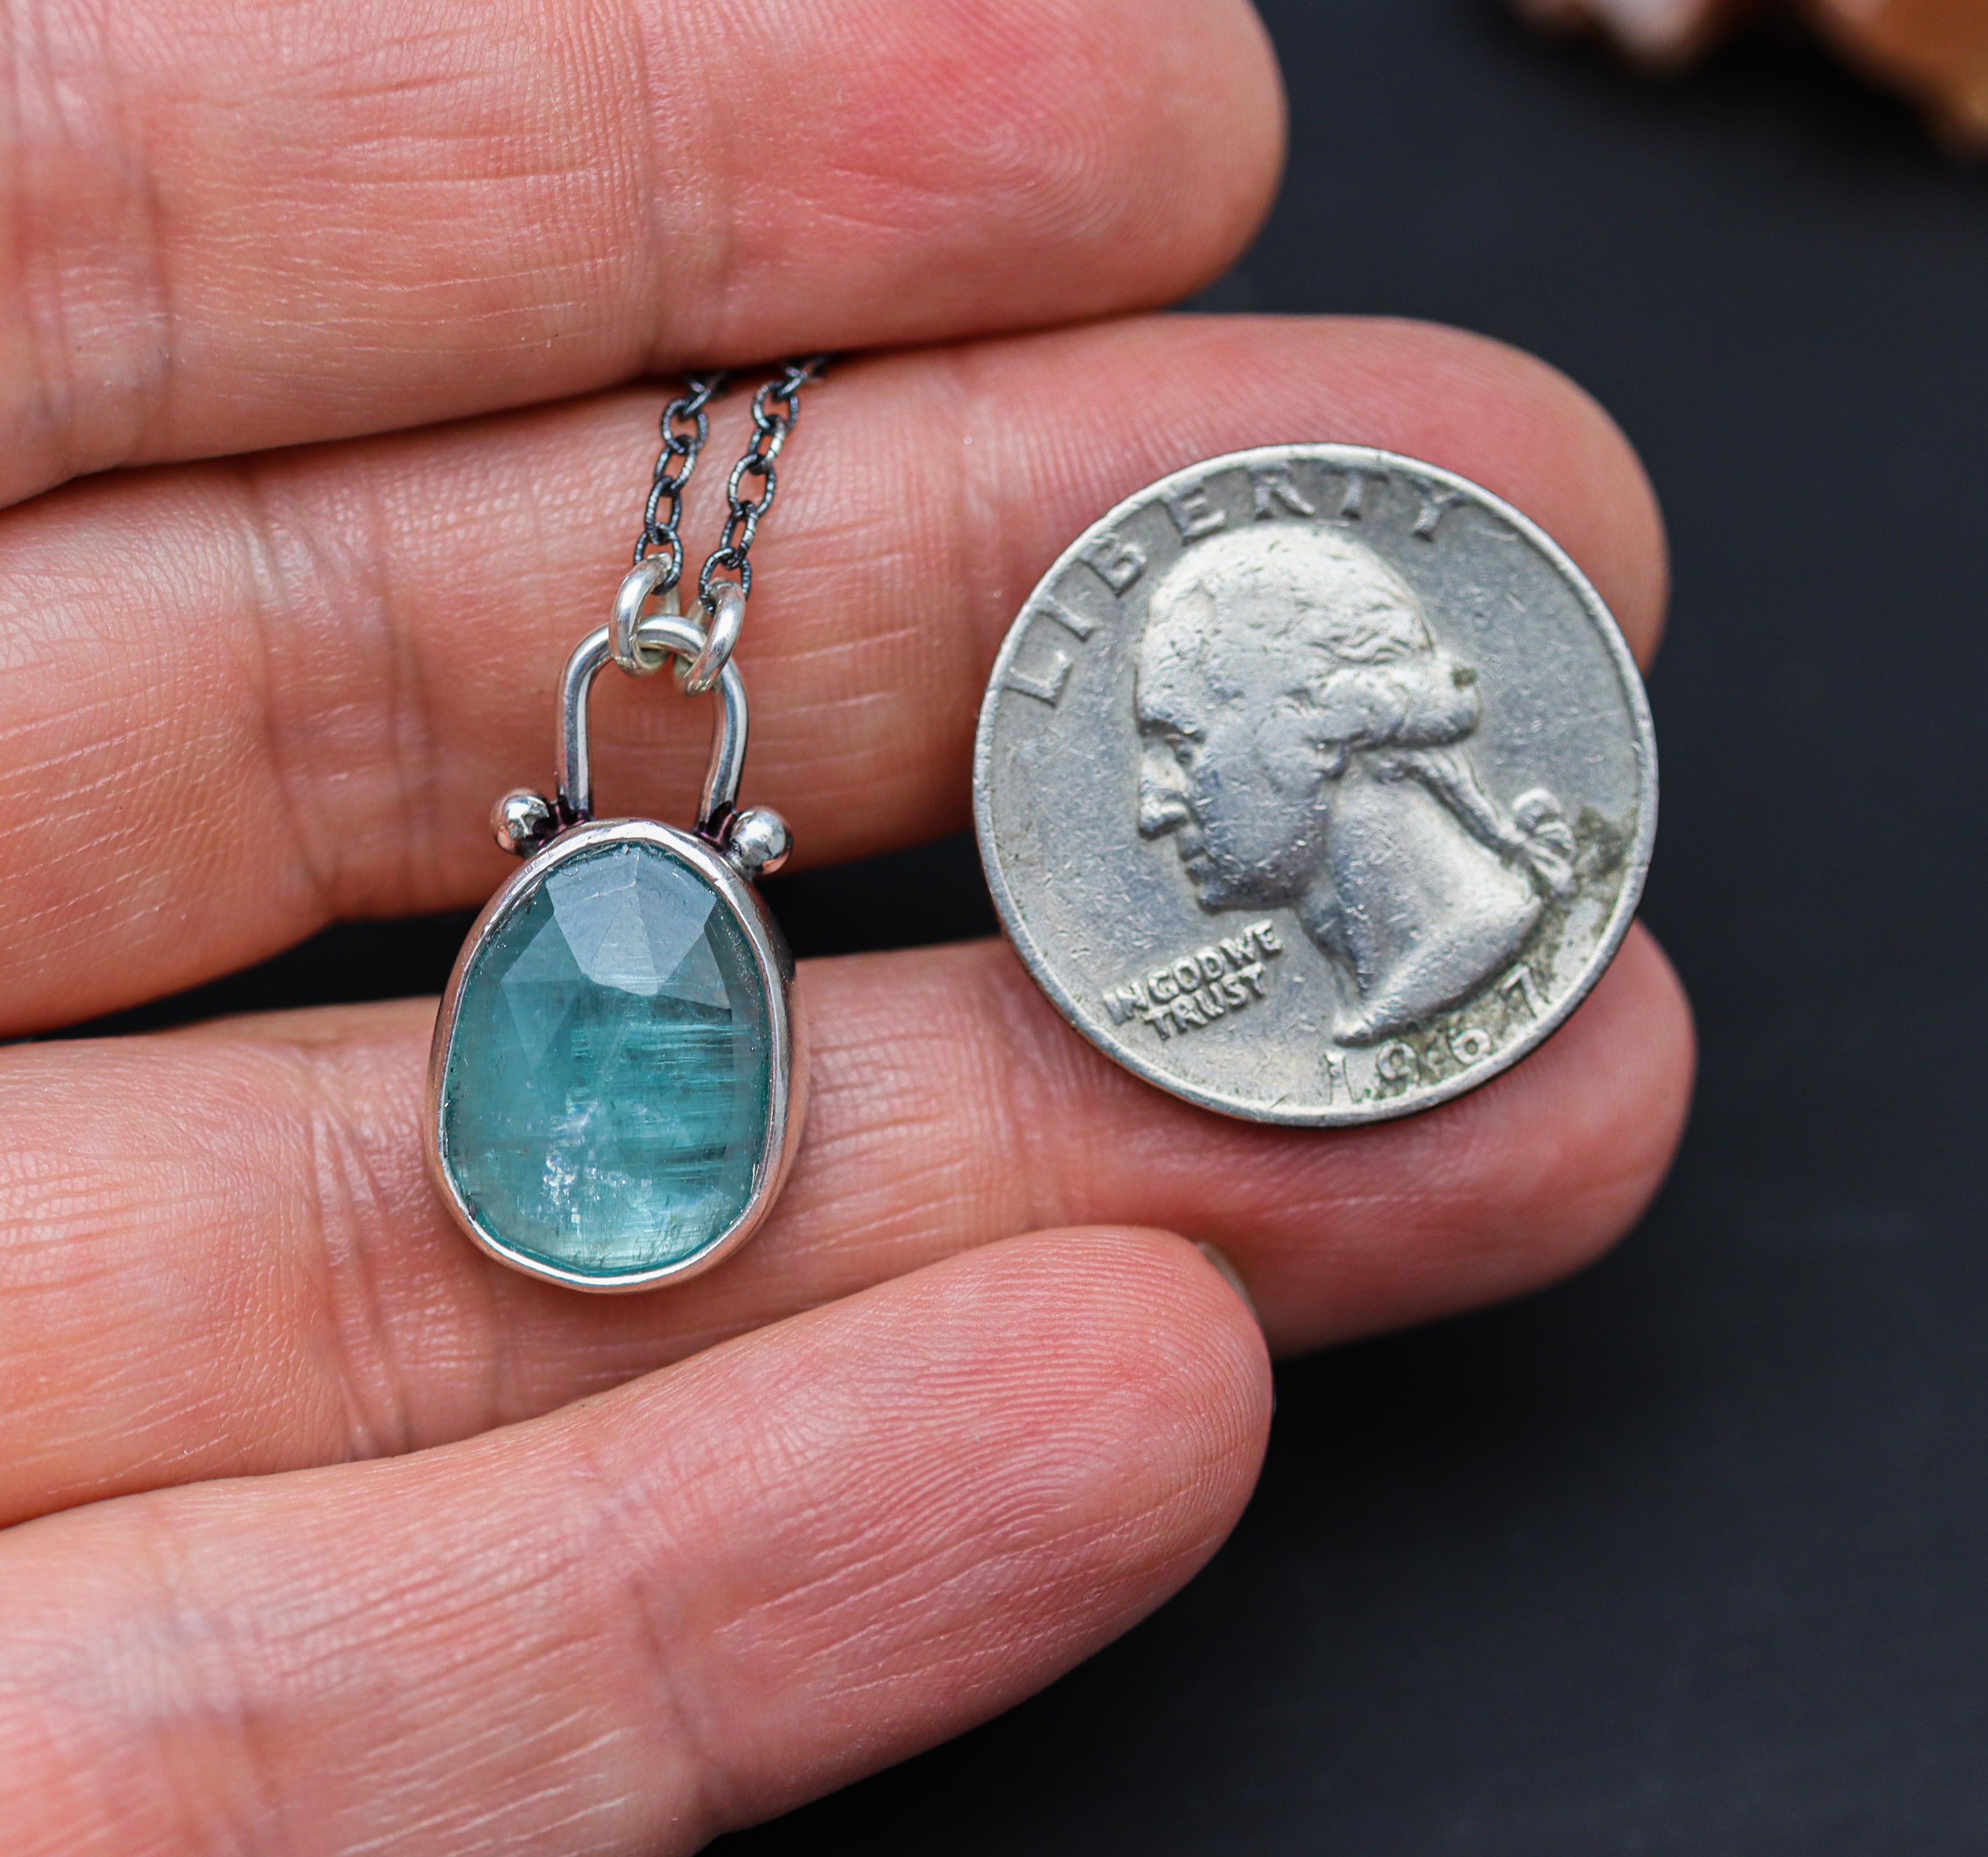 Aqua Blue Green Kyanite Pendant Necklace Sterling Silver